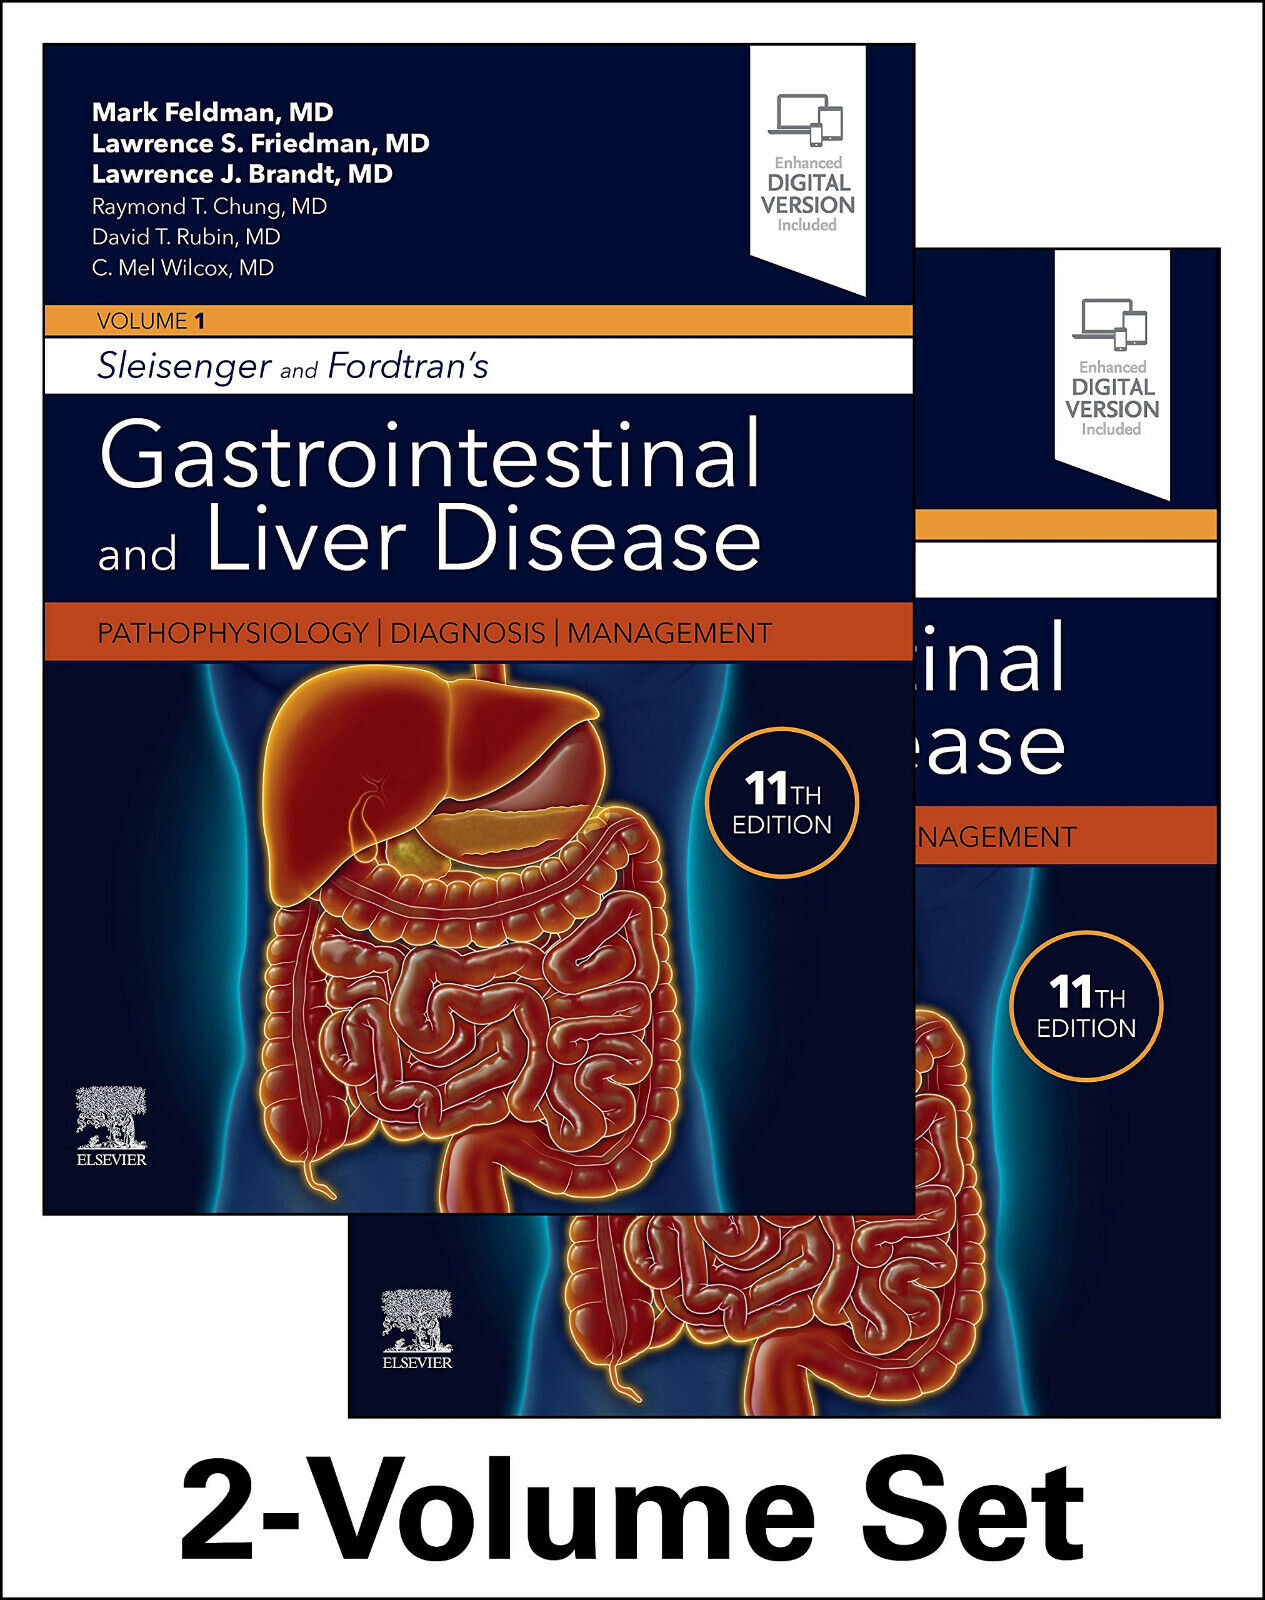 Sleisenger and Fordtran's Gastrointestinal and Liver Disease - Elsevier, 2020